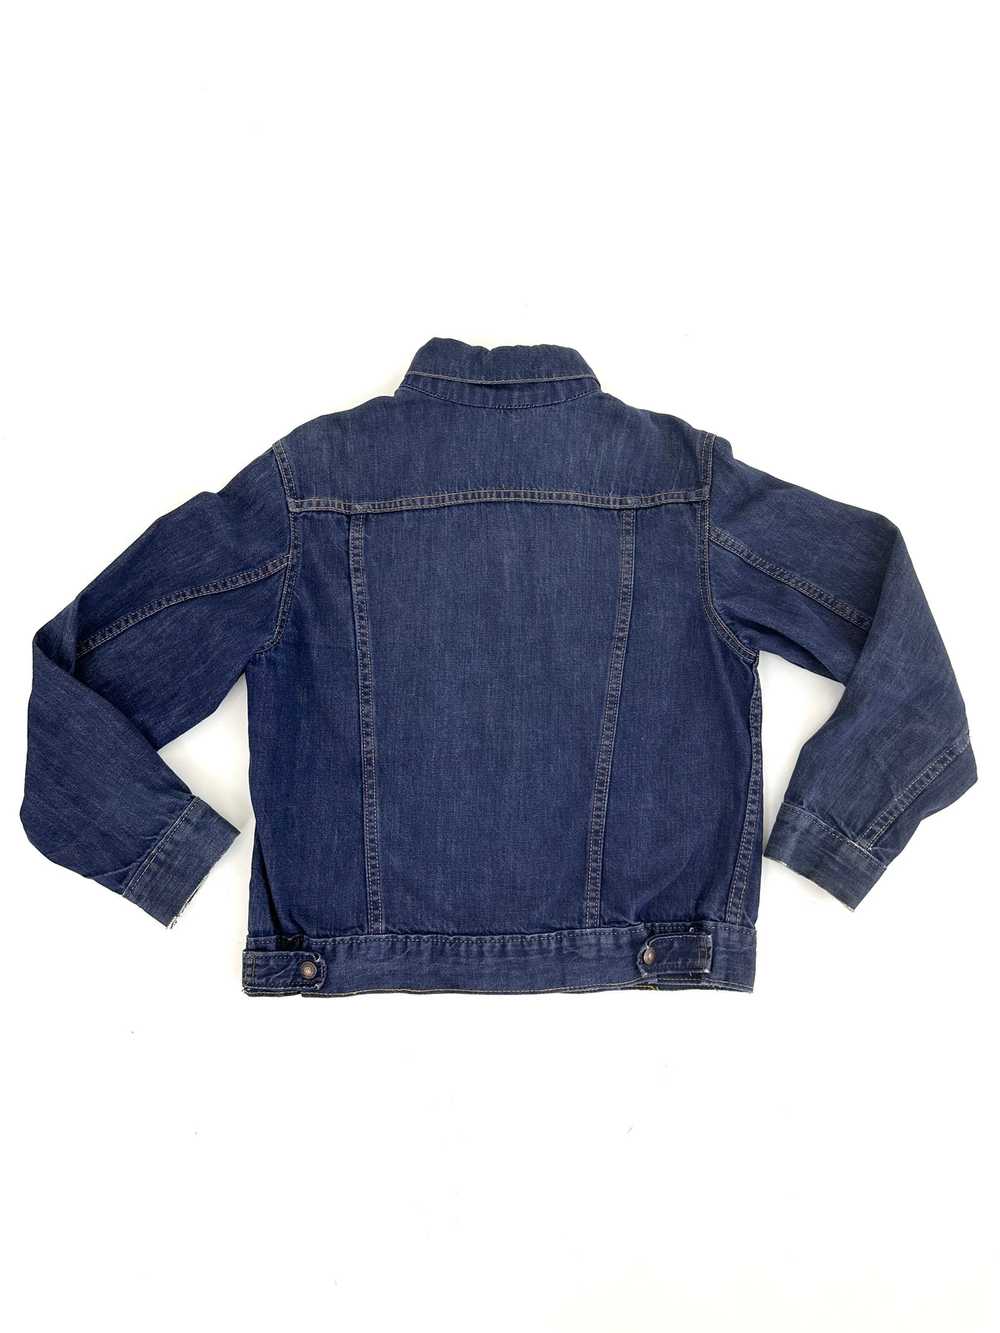 70s Levi's Dark Wash Denim Jacket - image 4